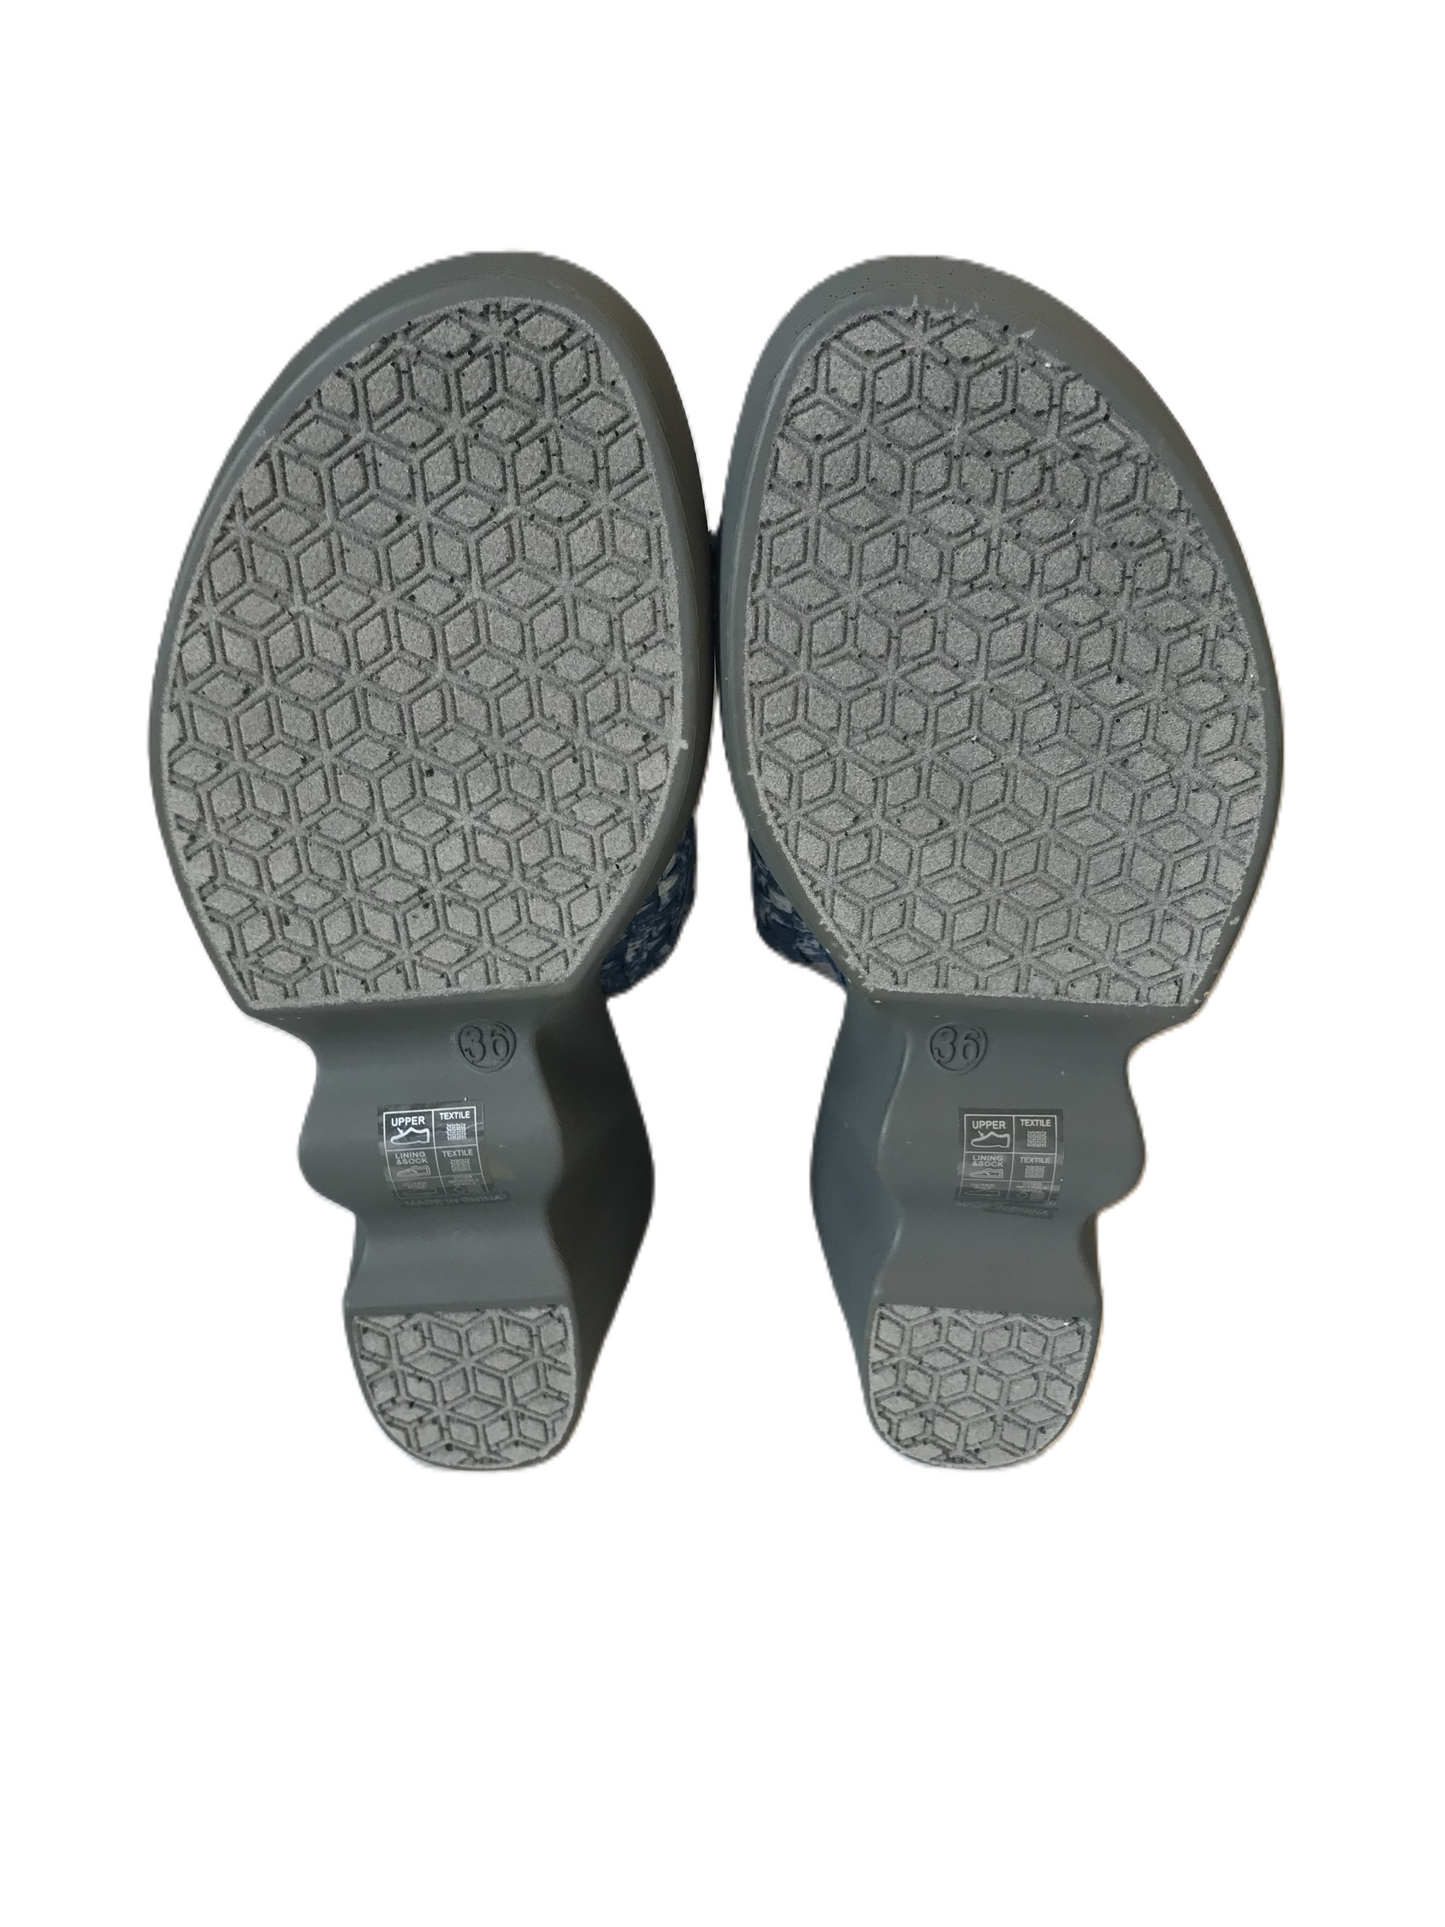 Sandals Heels Wedge By Zee Alexis  Size: 5.5